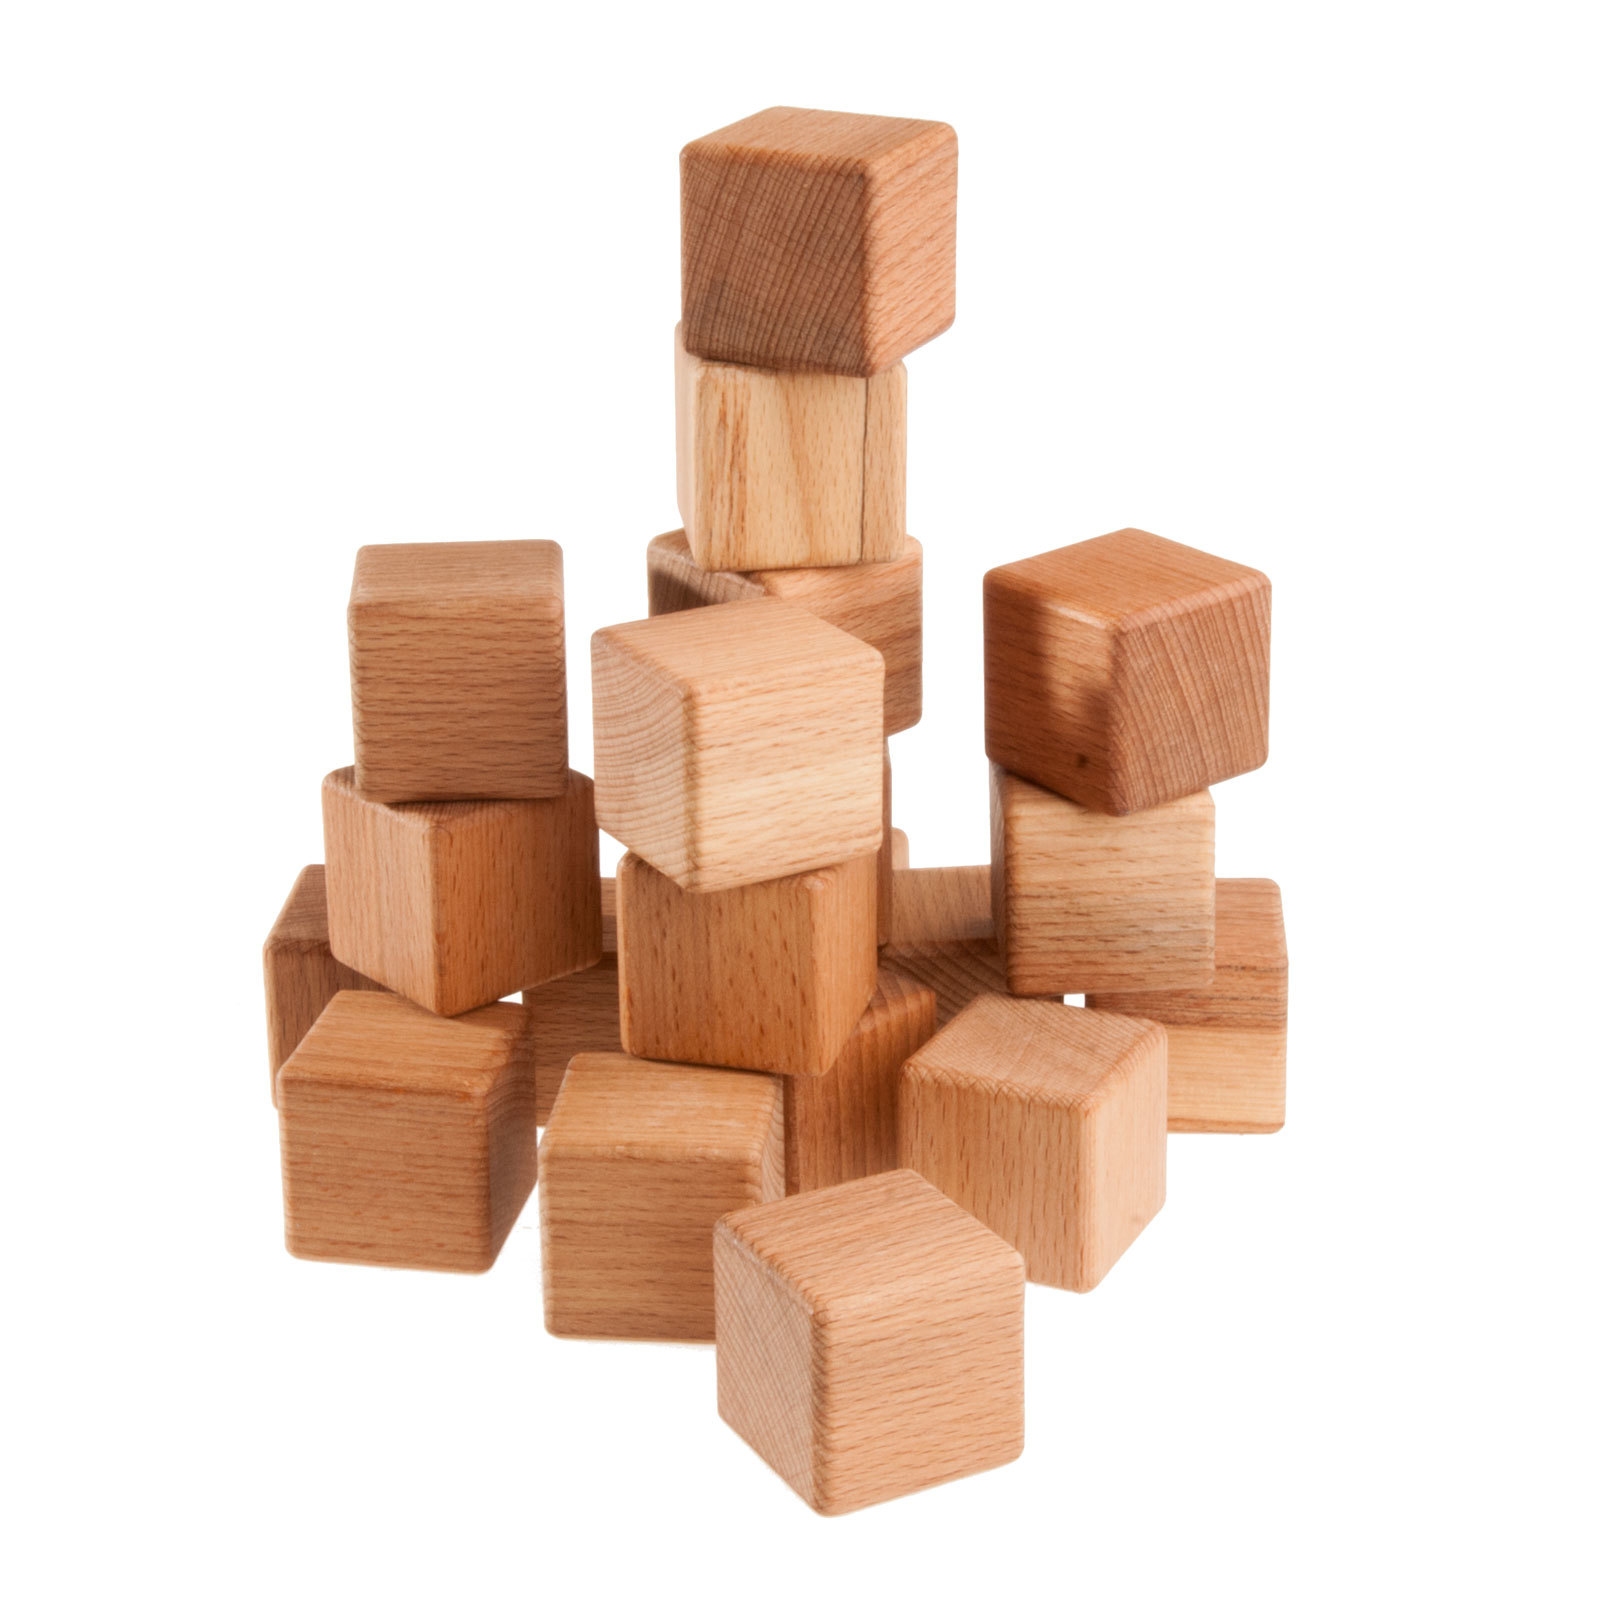 Кубики. Леснушки кубики буковые, 20 шт. Кубики буковые 20 шт. Кубики Леснушки 5 пород. Деревянные кубики для детей.